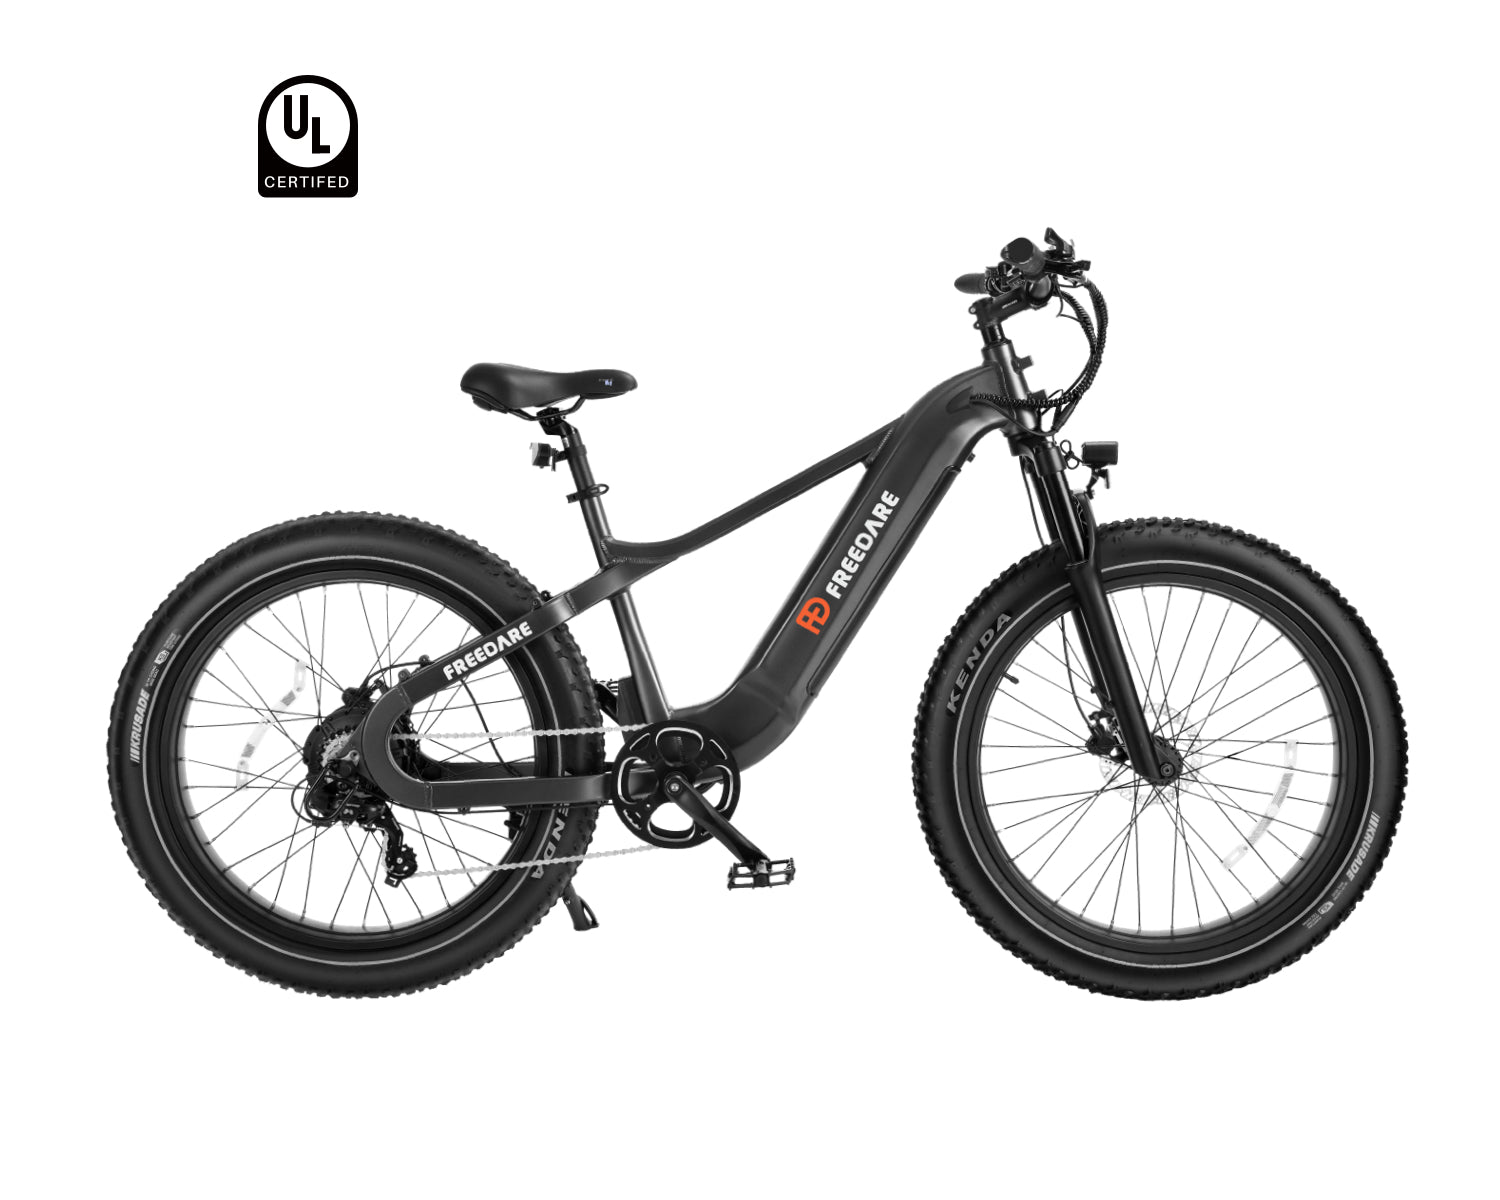 FD Saiga All-terrain Fat Tire Electric Bike丨UL Certified